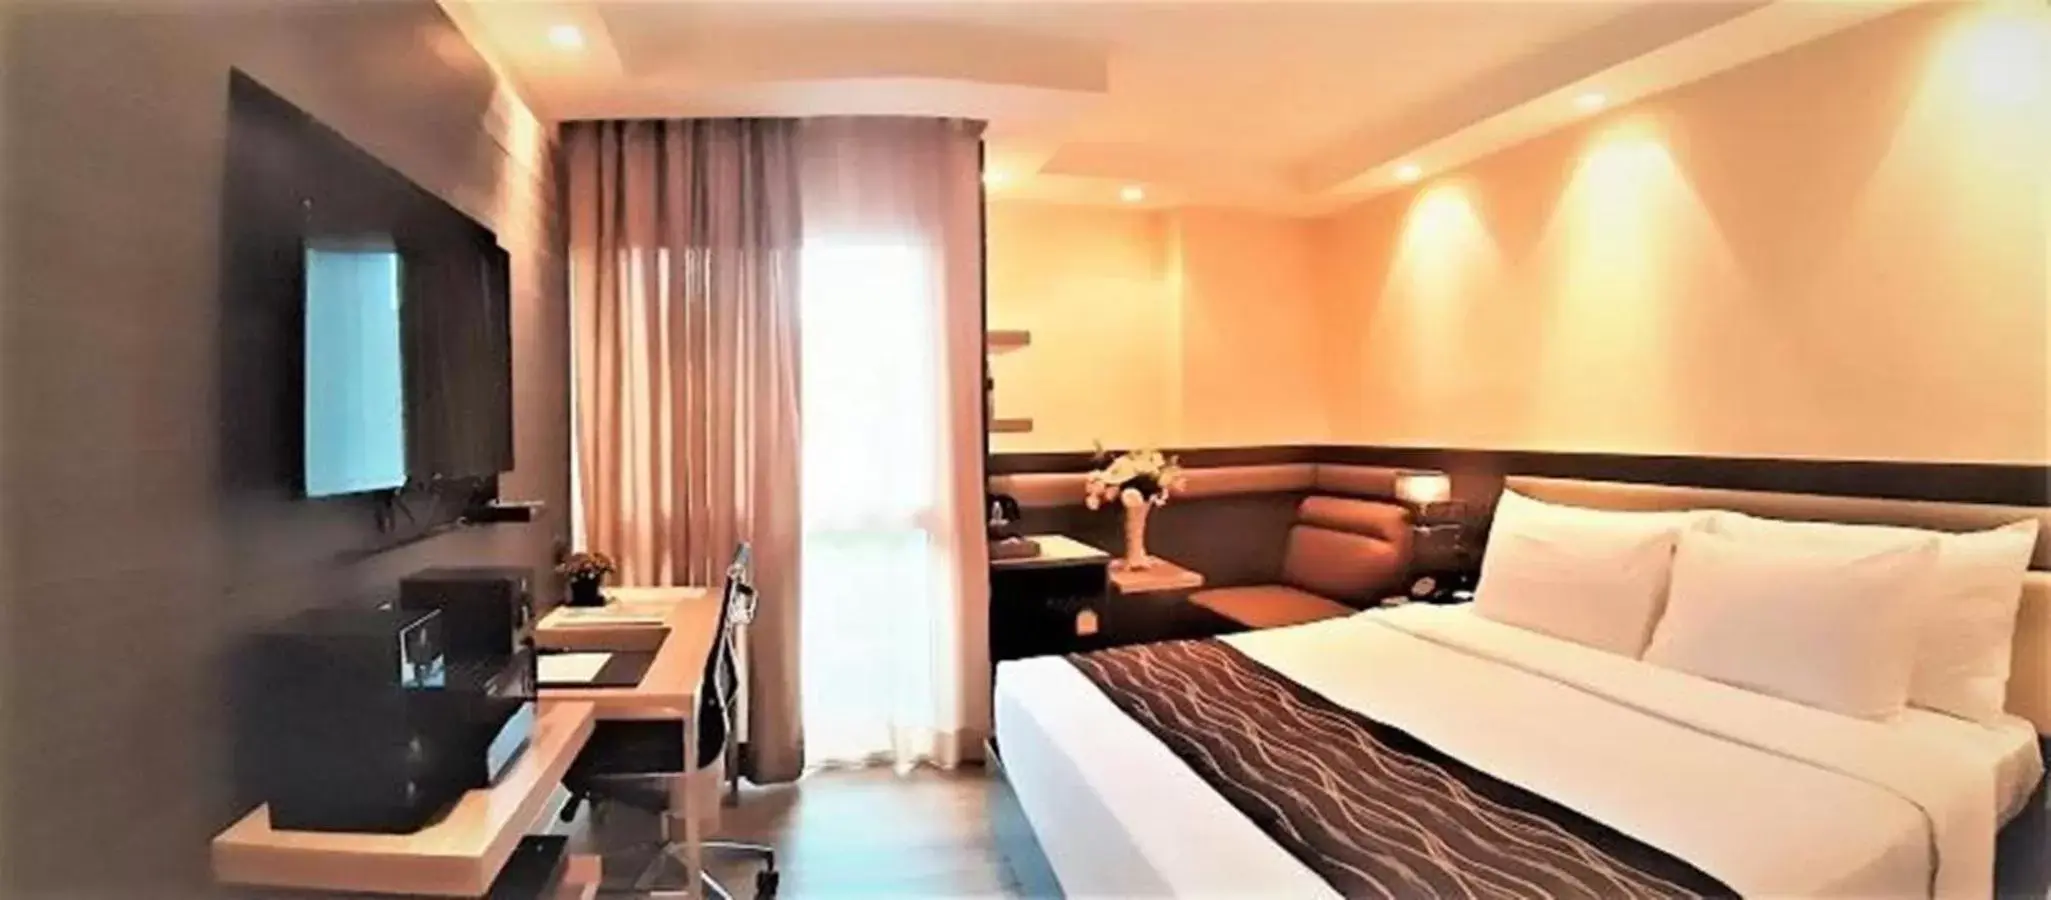 Bed in Amora NeoLuxe Suites Hotel